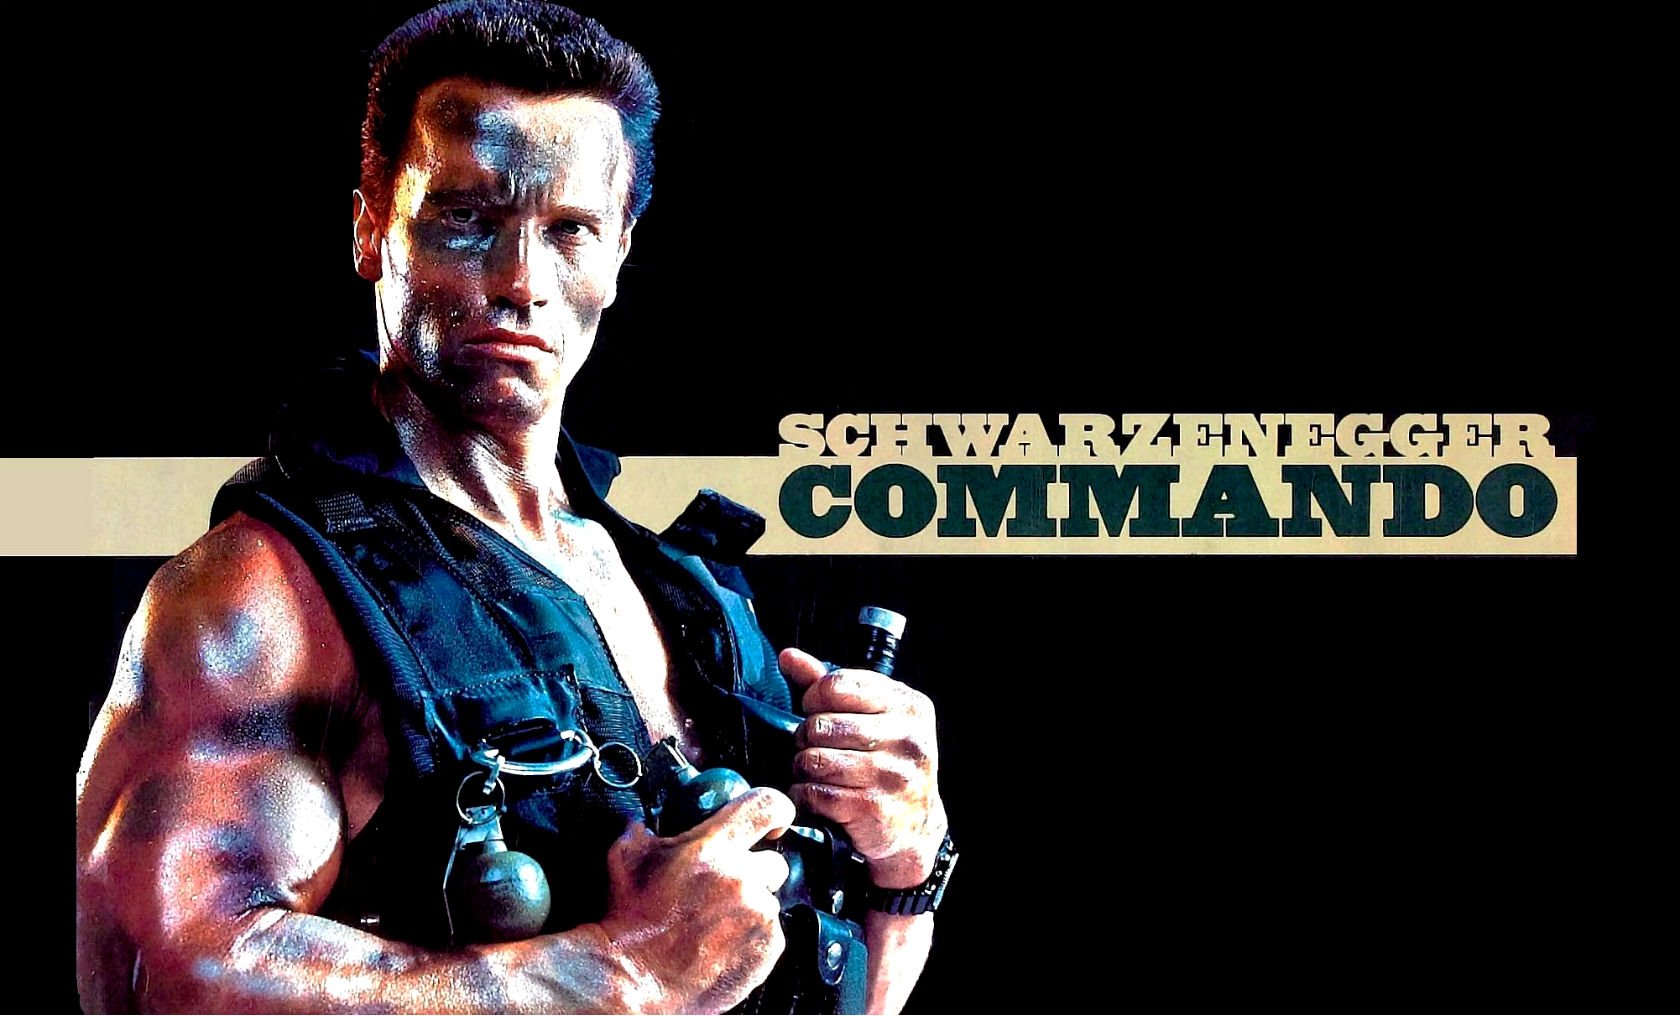 commando, Movie, Action, Fighting, Military, Arnold, Schwarzenegger, Soldier, Special, Forces, Adventure, Thriller, Movie, Film, Warrior, Fantasy, Sci fi, Futuristic, Science, Fiction Wallpaper